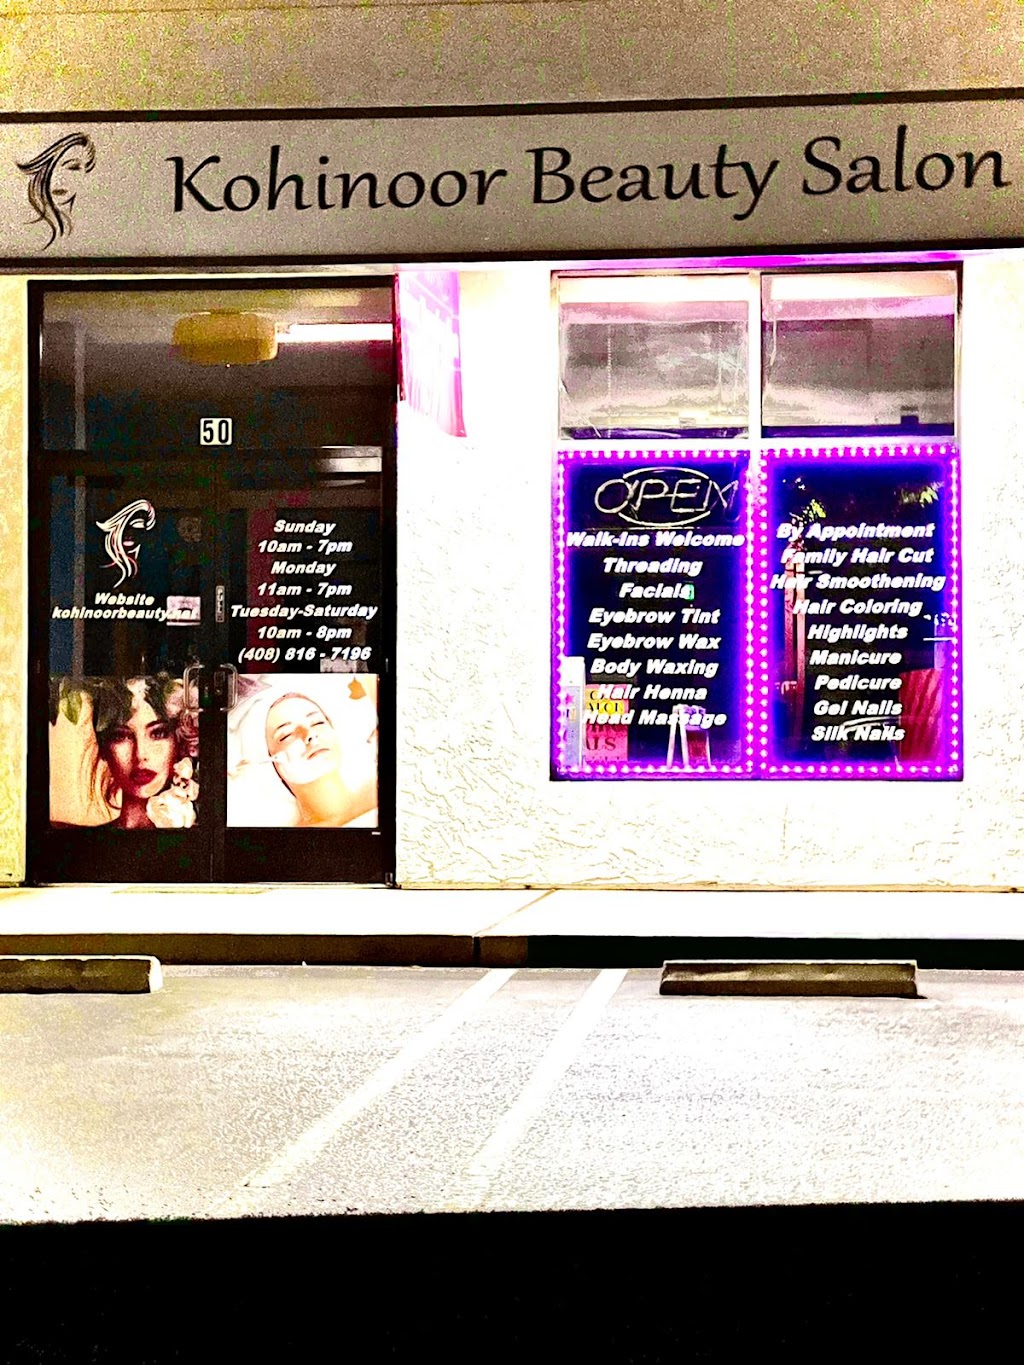 Kohinoor Beauty Salon | 1132 S De Anza Blvd #50, San Jose, CA 95129, USA | Phone: (408) 816-7196